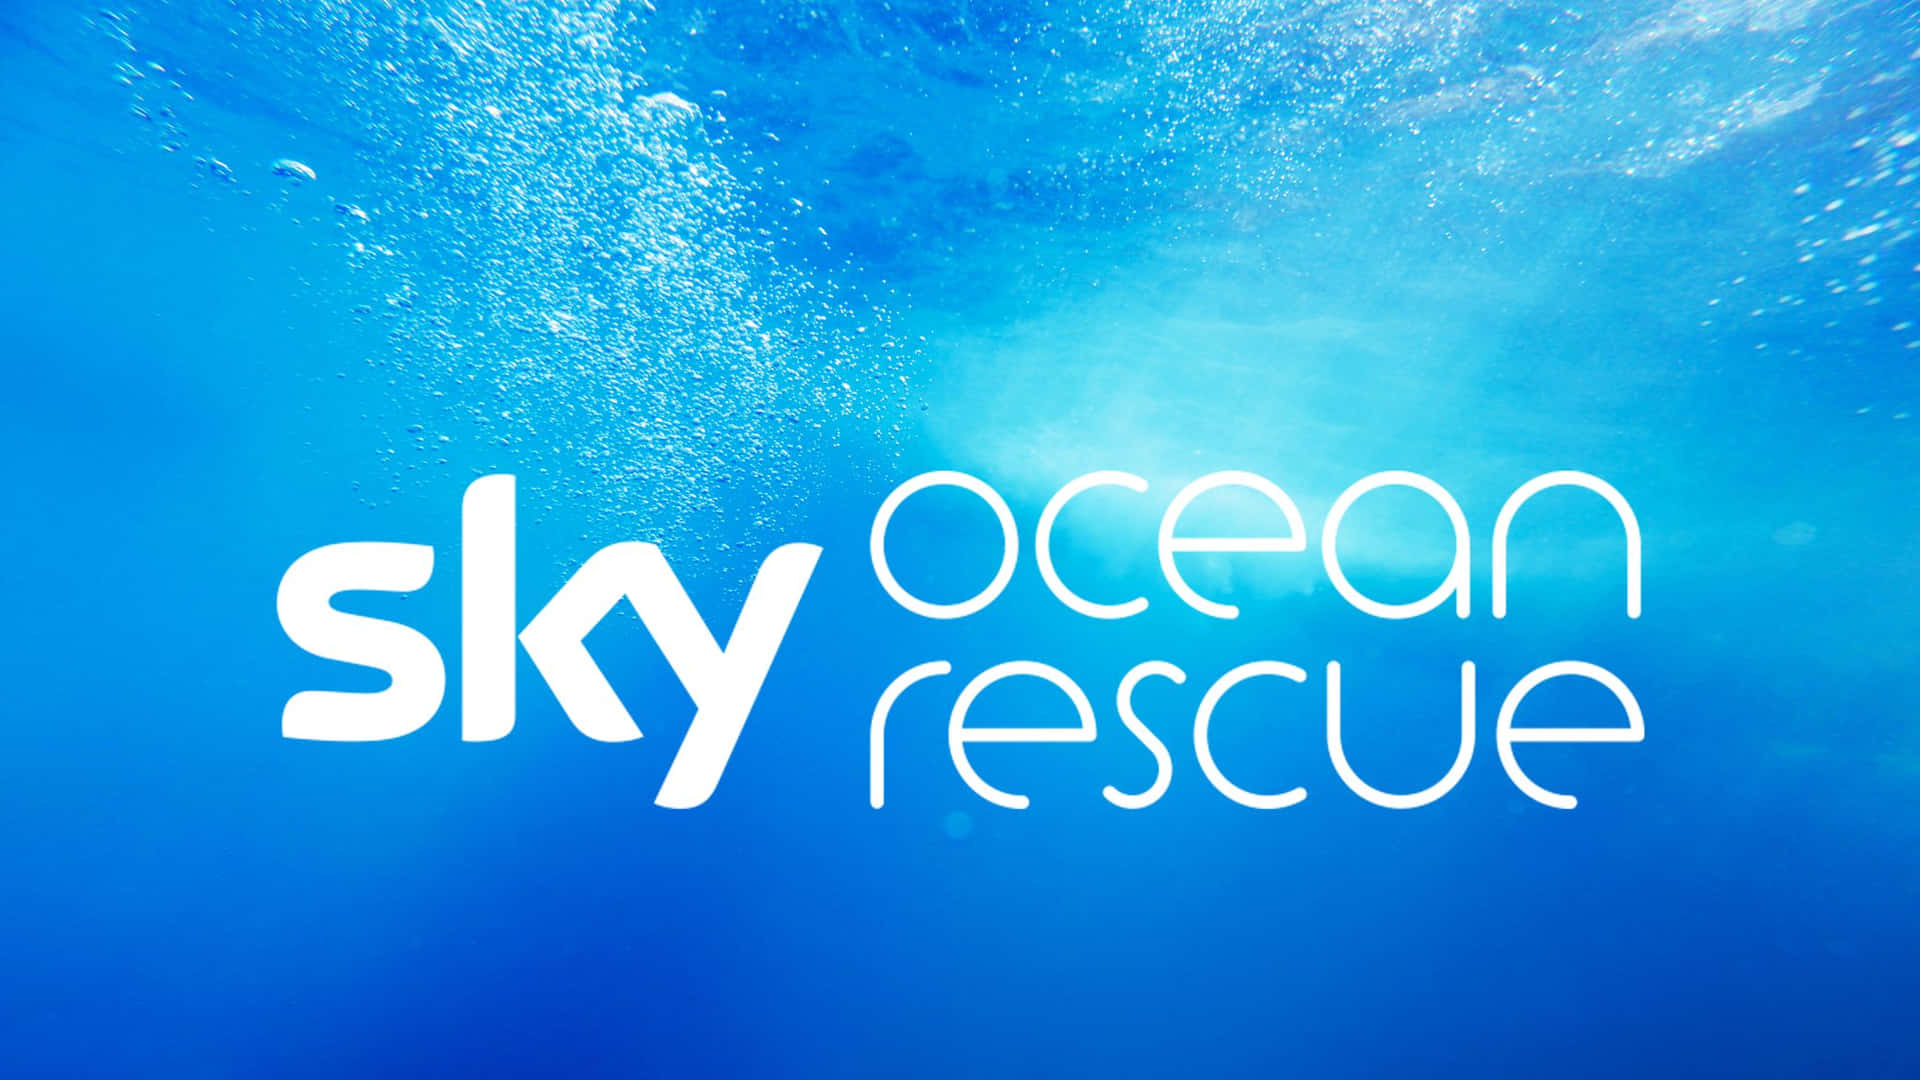 Sky News Ocean Rescue Wallpaper